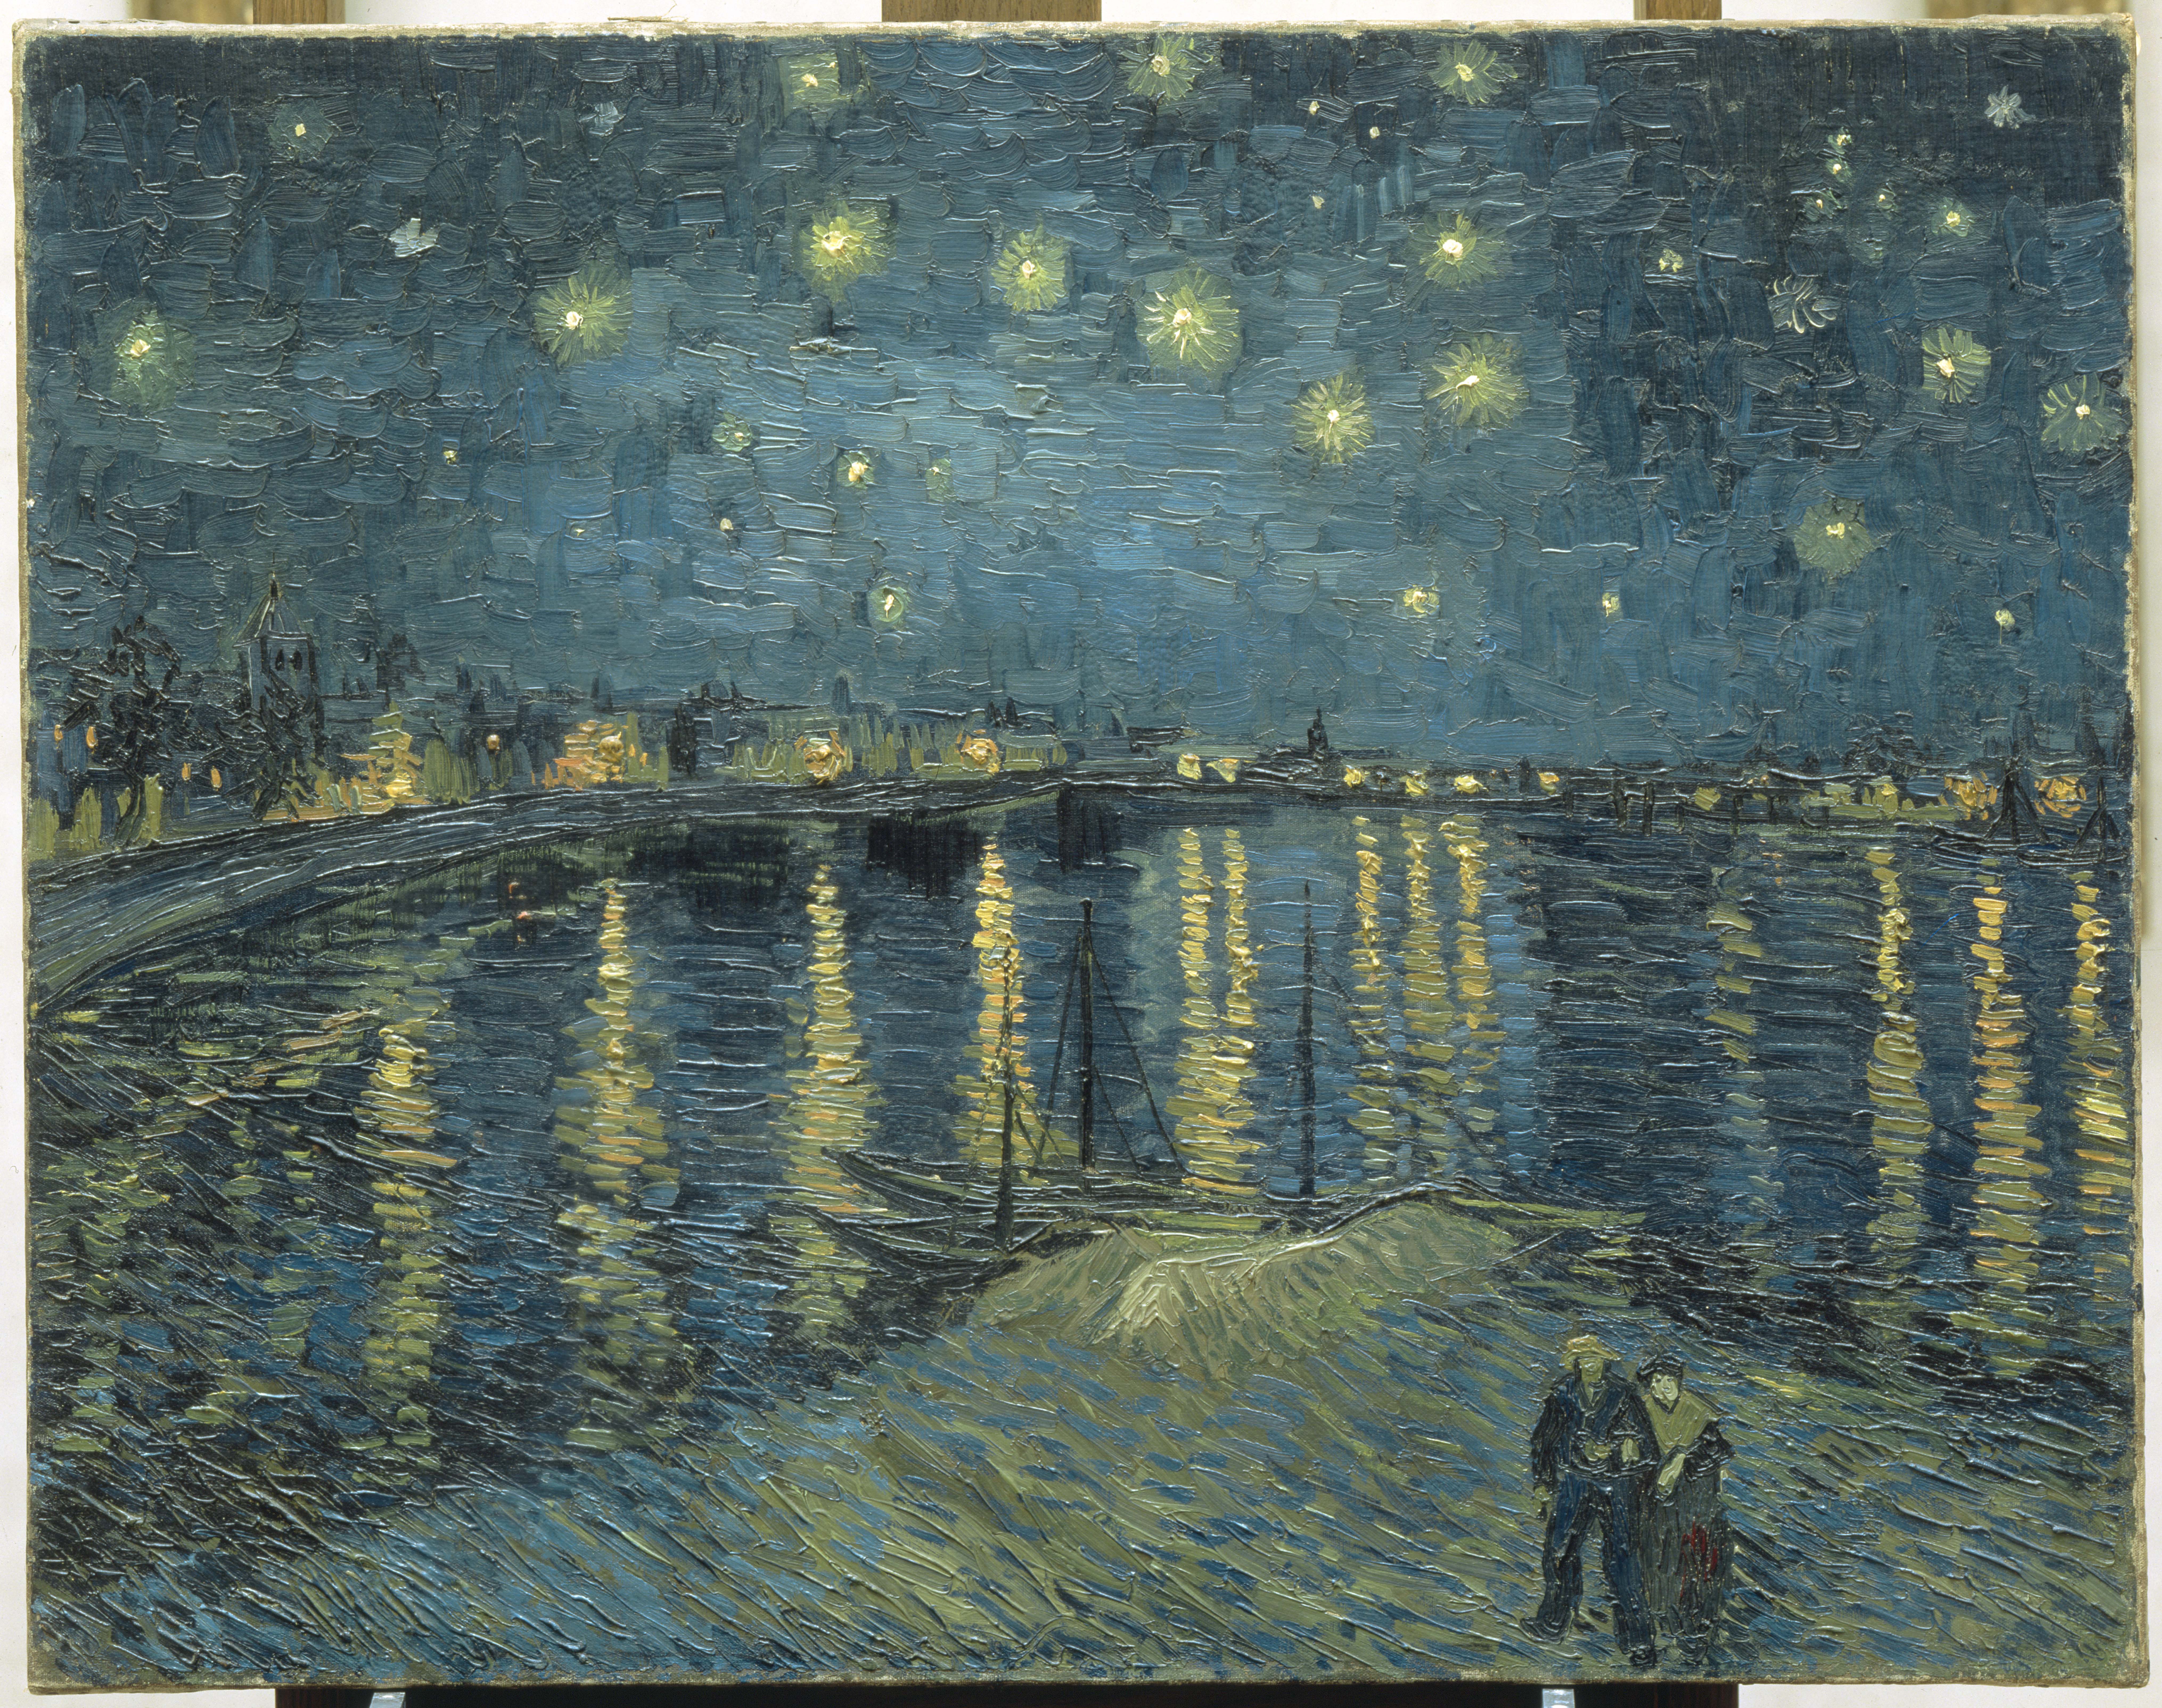 van-gogh-vincent_la-nuit-etoilee-starry-night-over-the-rhone_1888bis